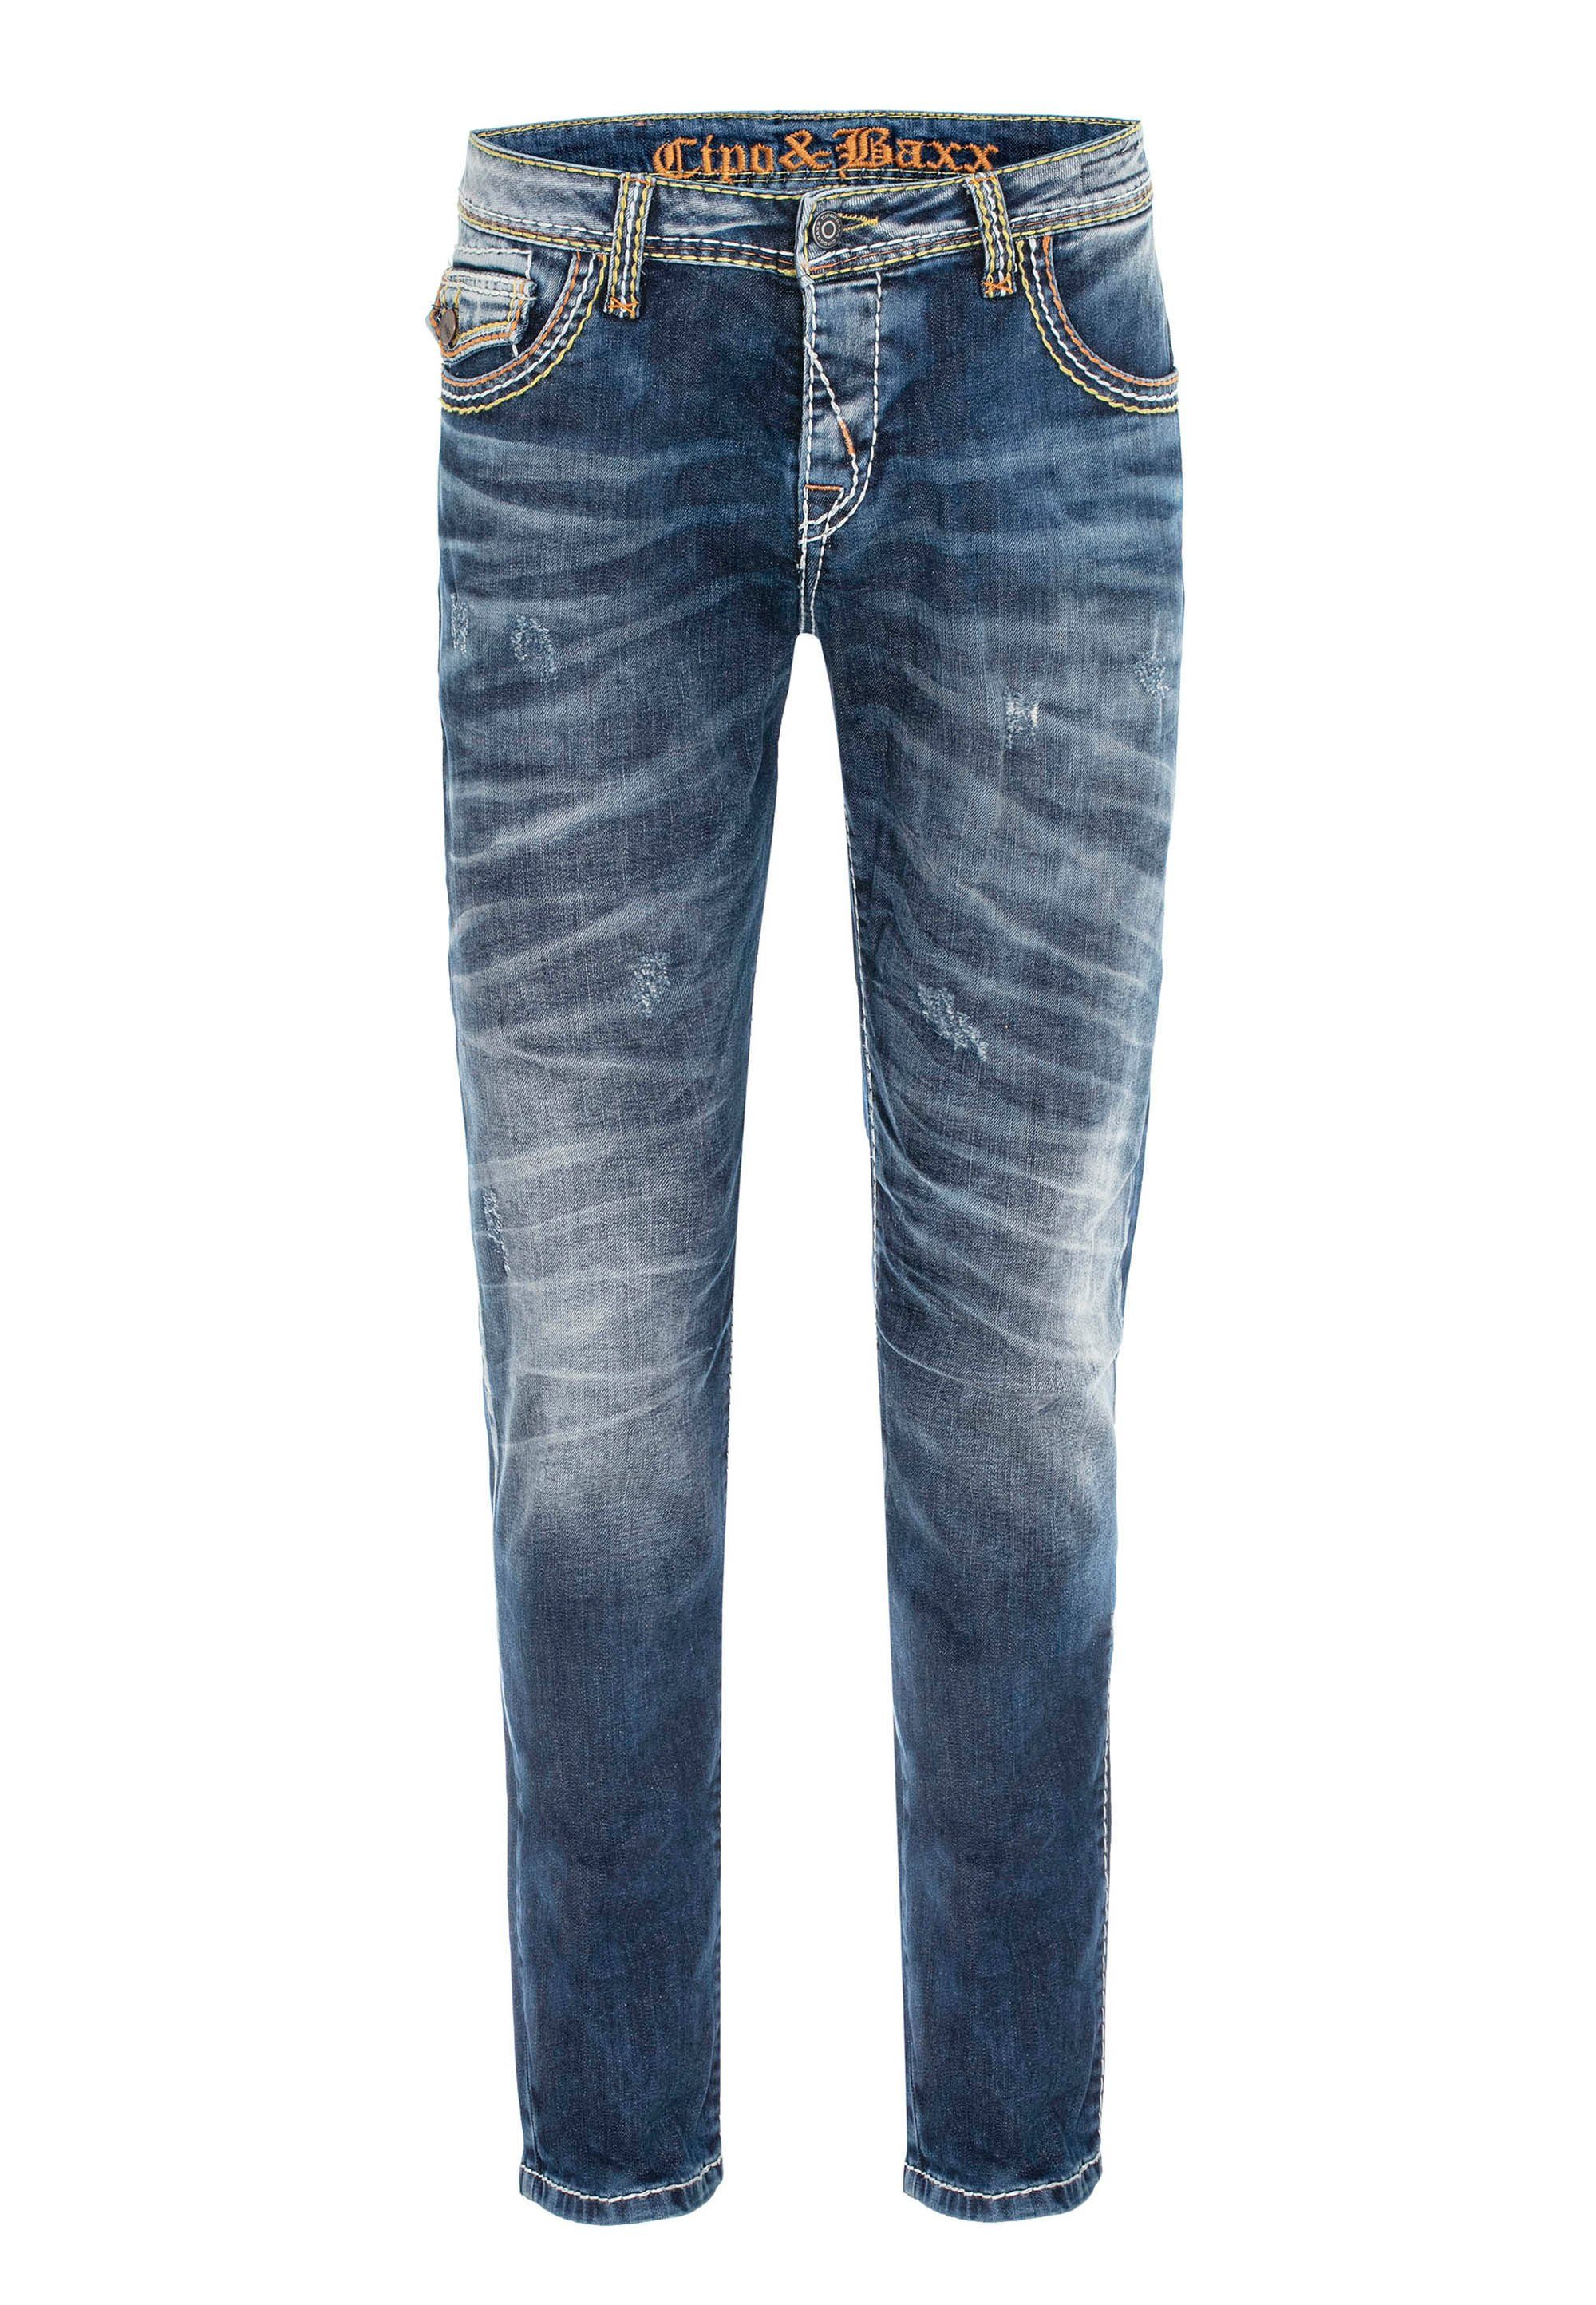 Cipo & Baxx Bequeme Jeans in modischer Optik in Straight Fit